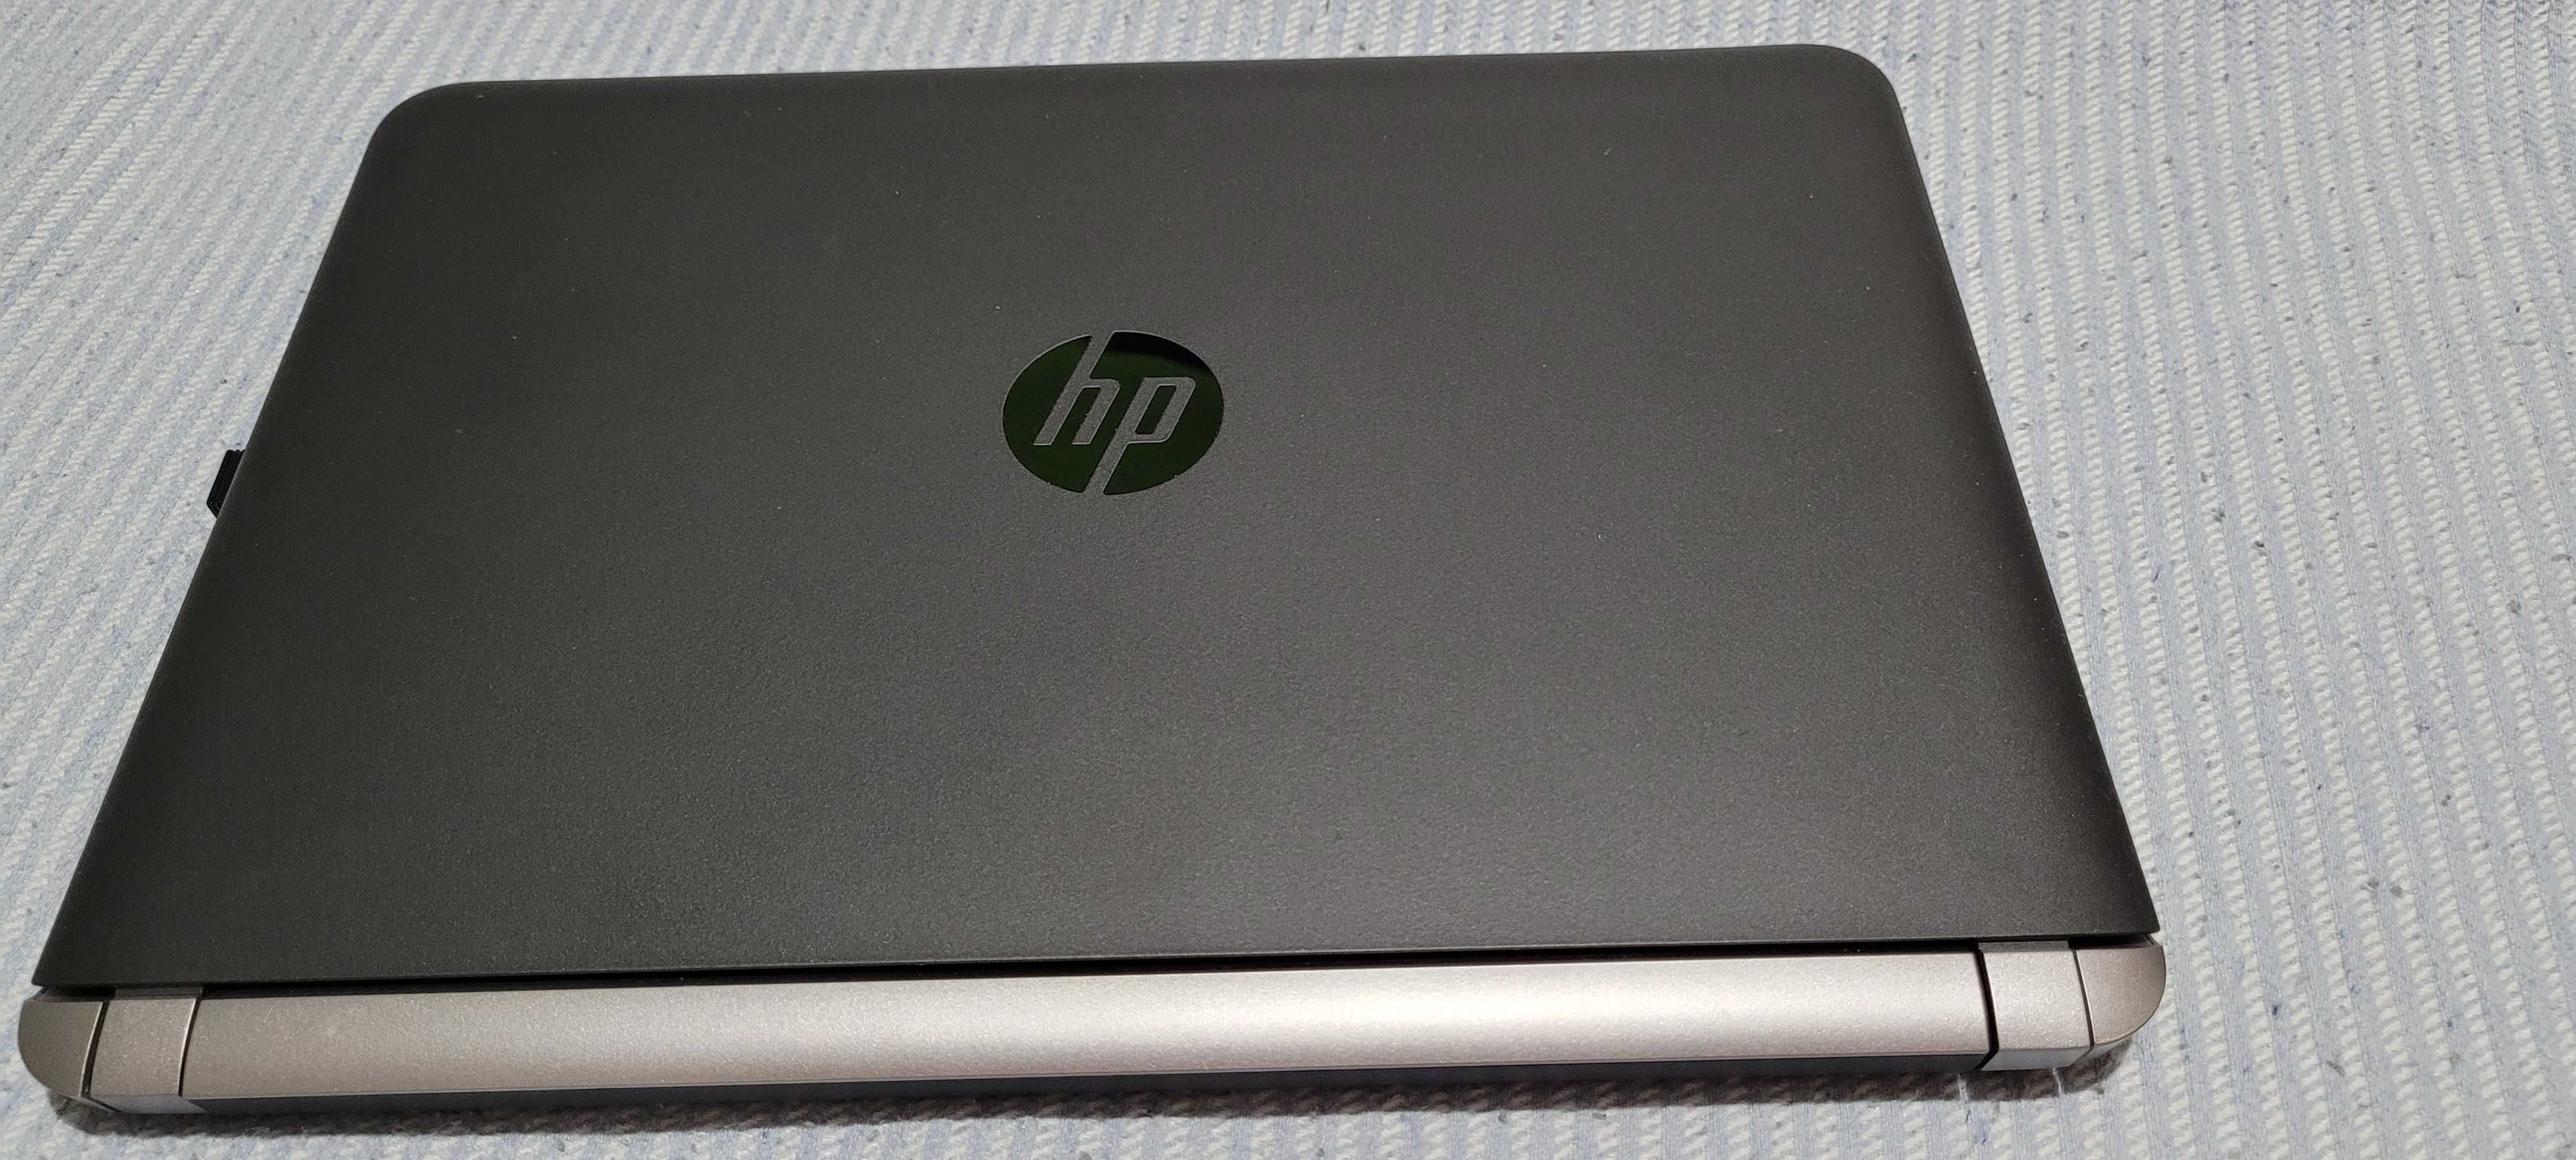 laptop HP ProBook 440 G3 i5 480G 8Gb 14 inch